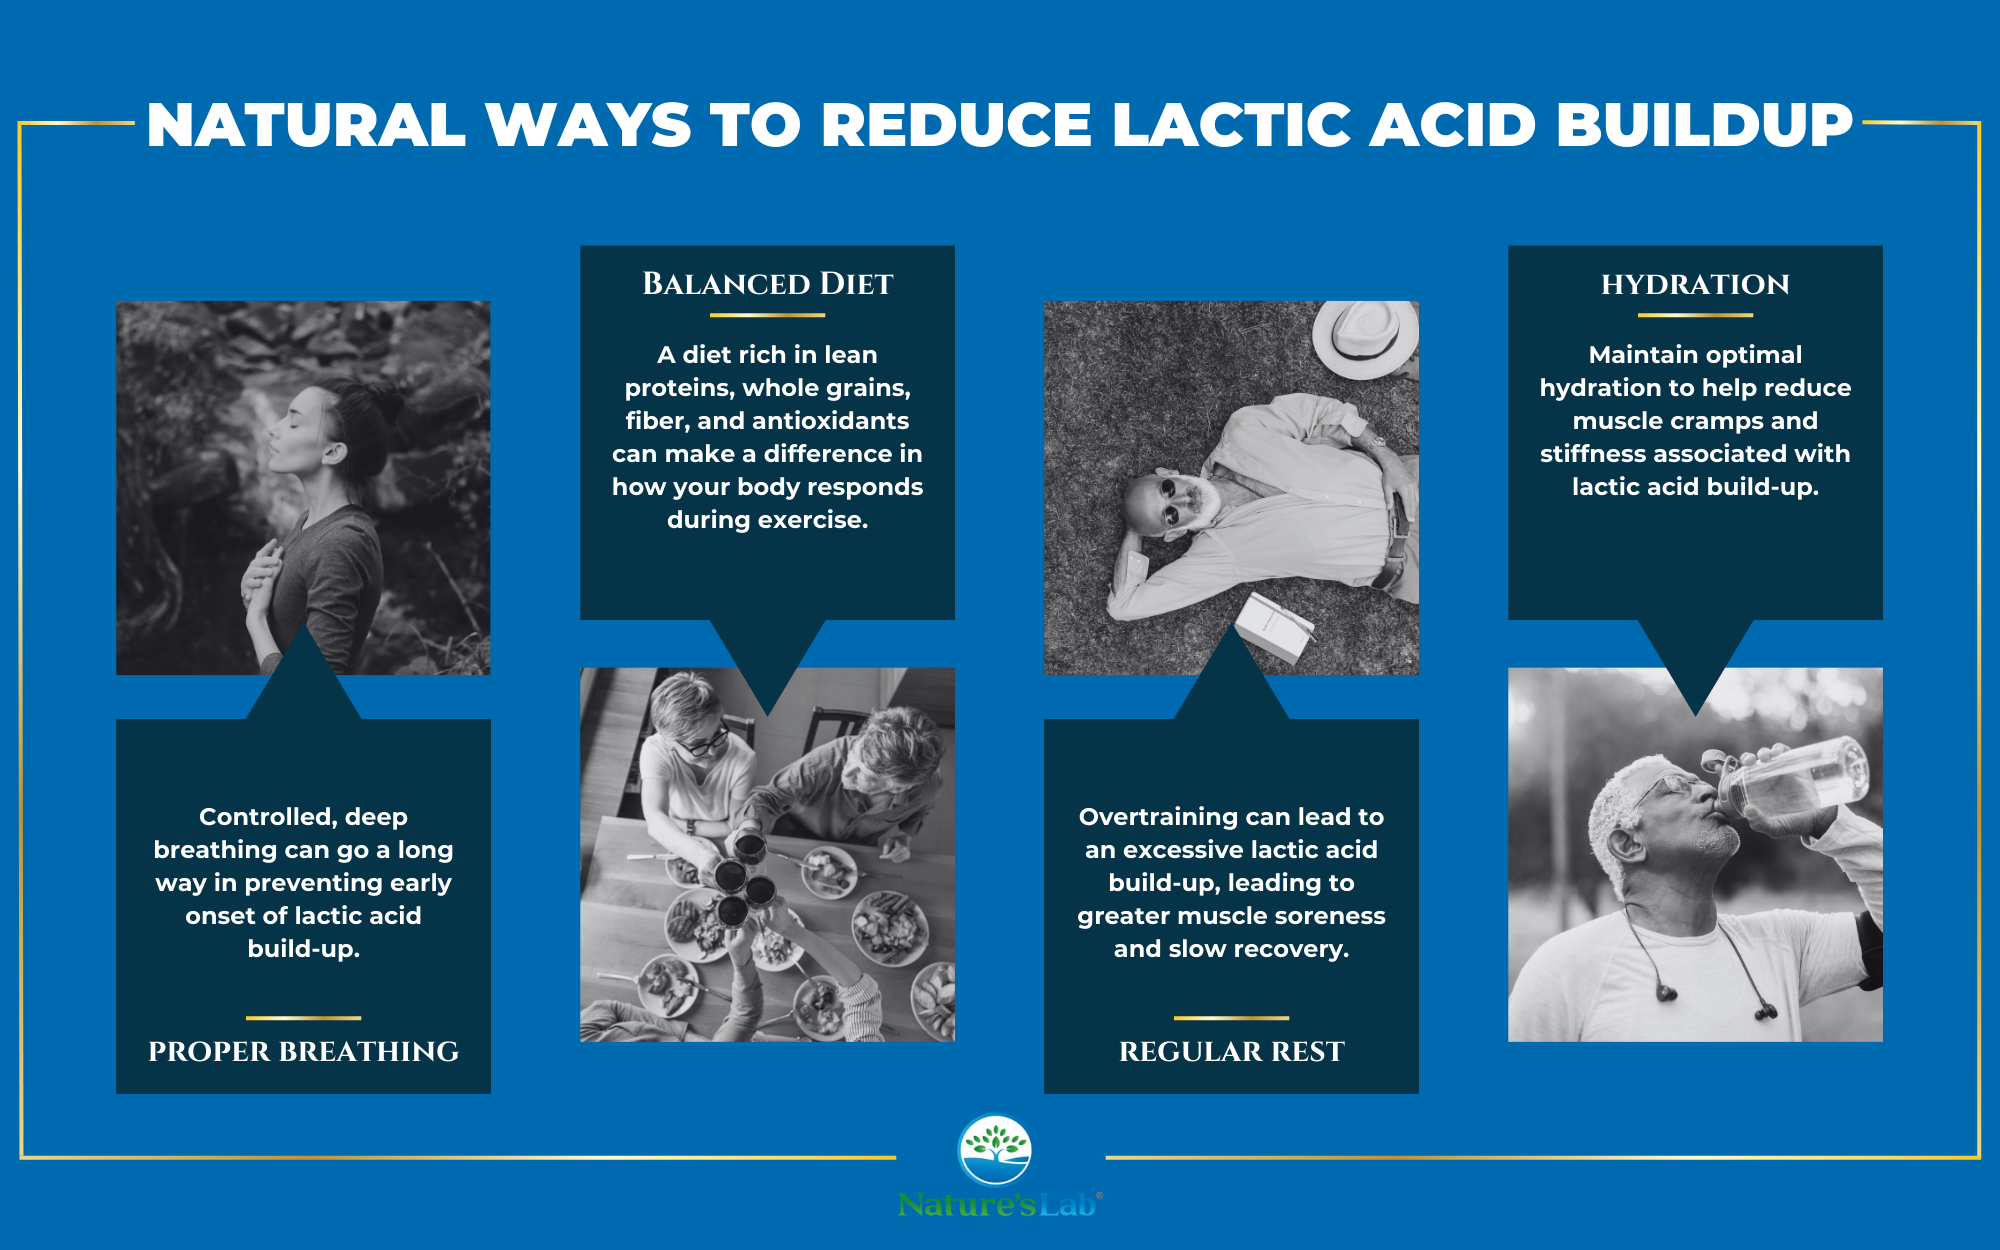 Natural ways to reduce lactic acid buildup infographic